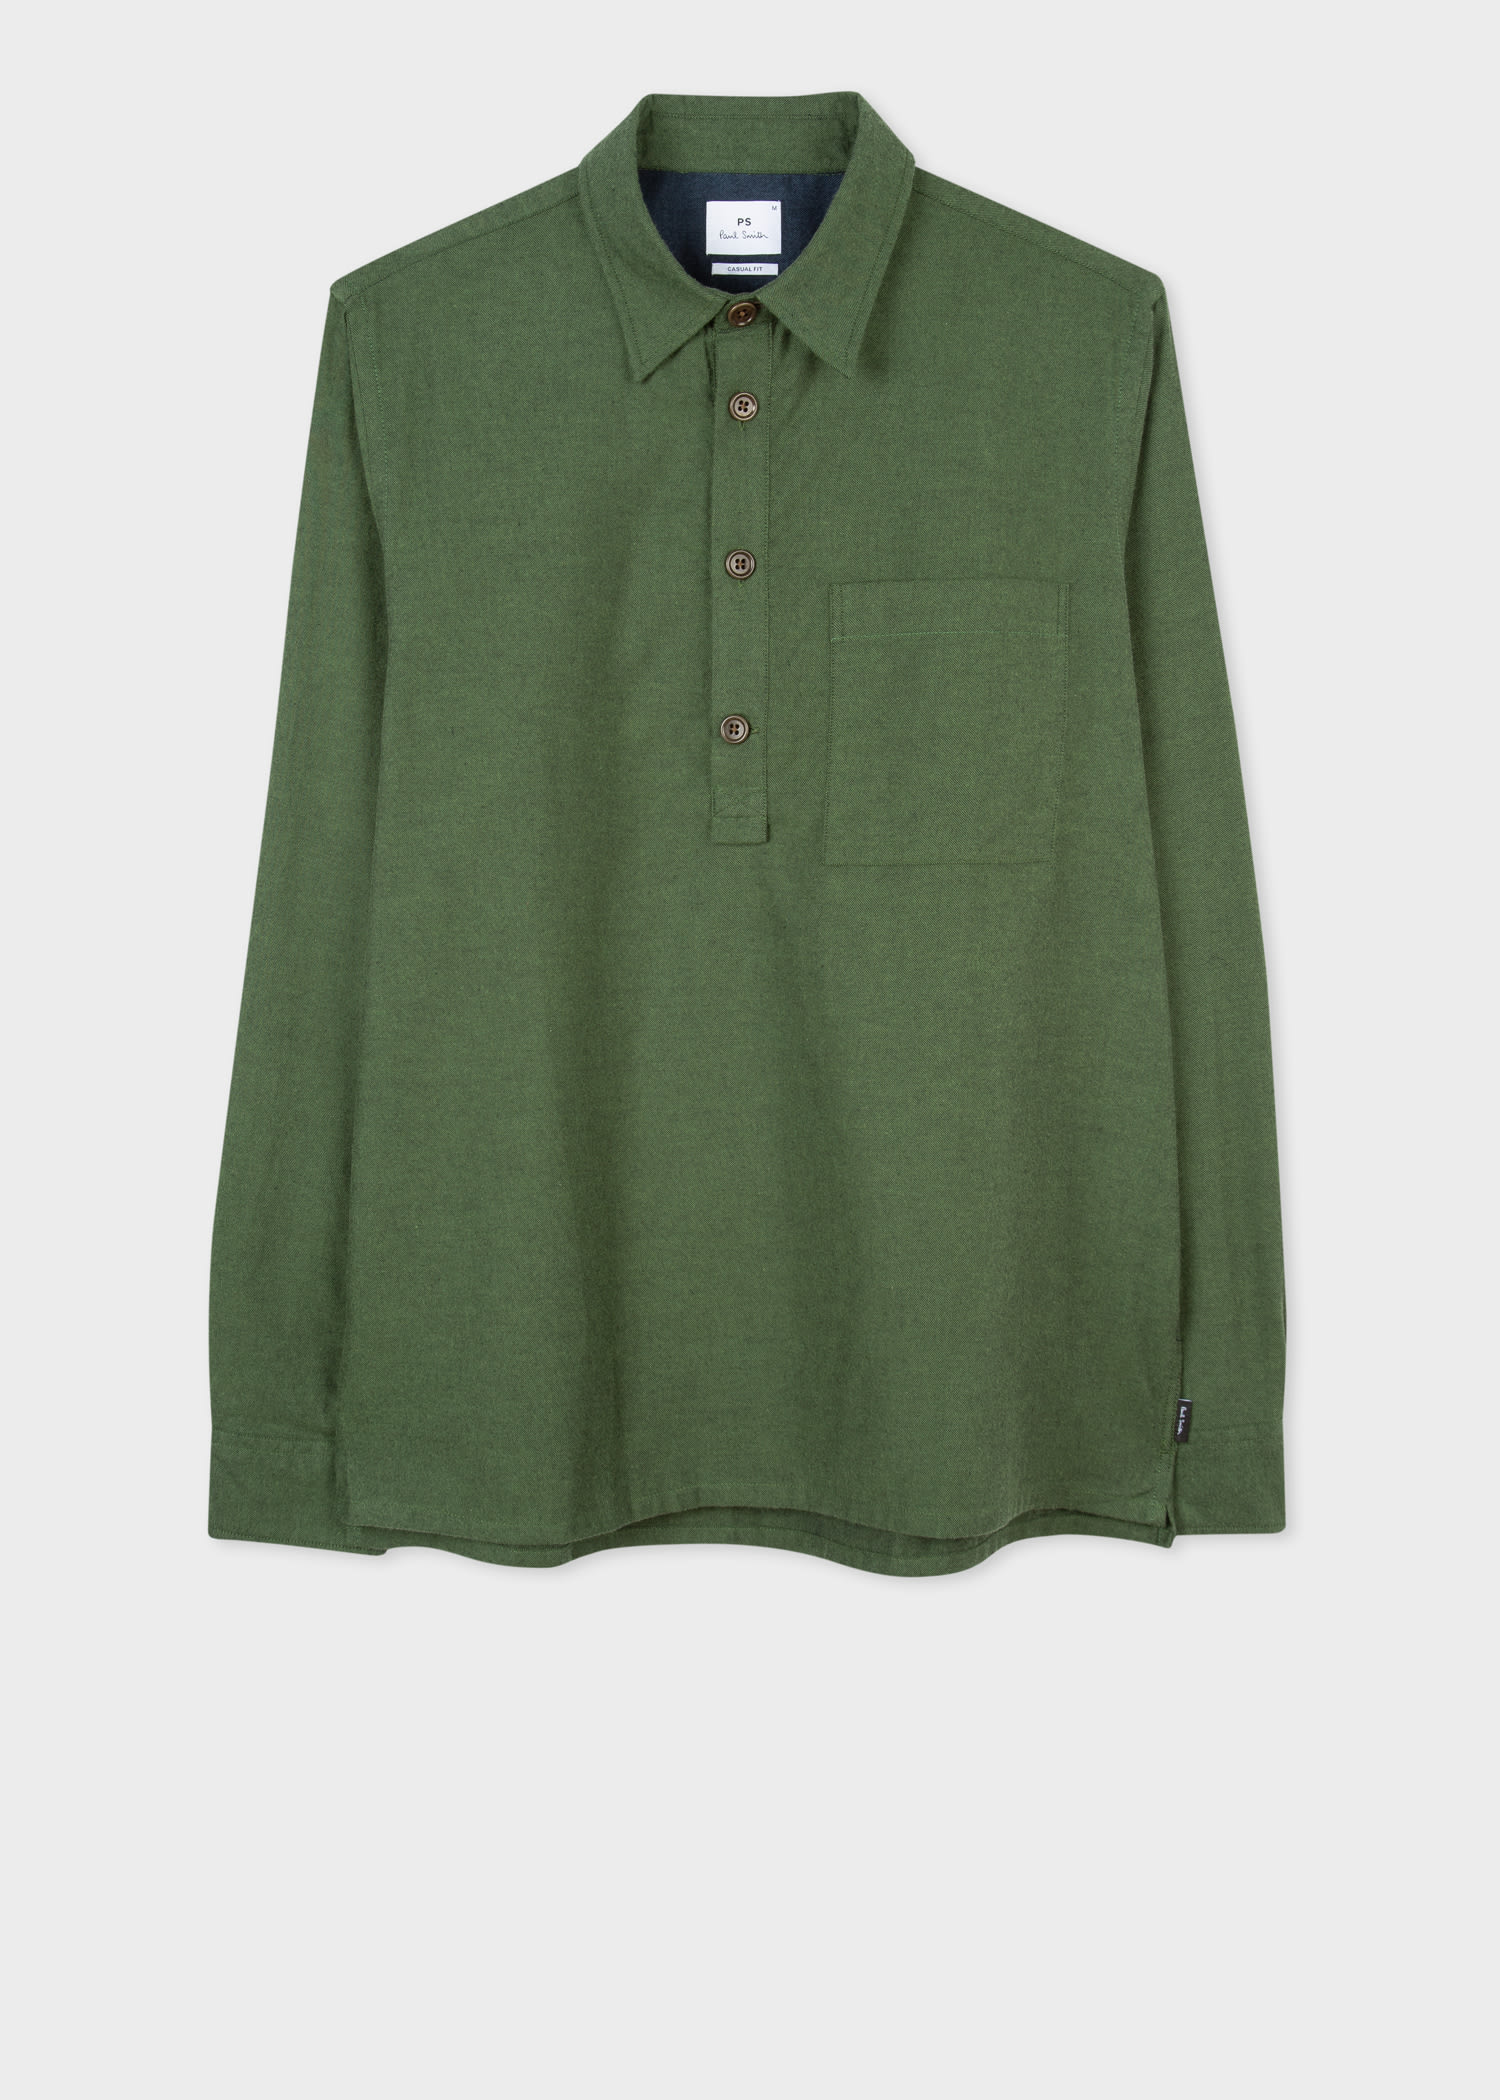 Men's Designer Shirts | Long Sleeve & Short Sleeve Shirts - Paul Smith